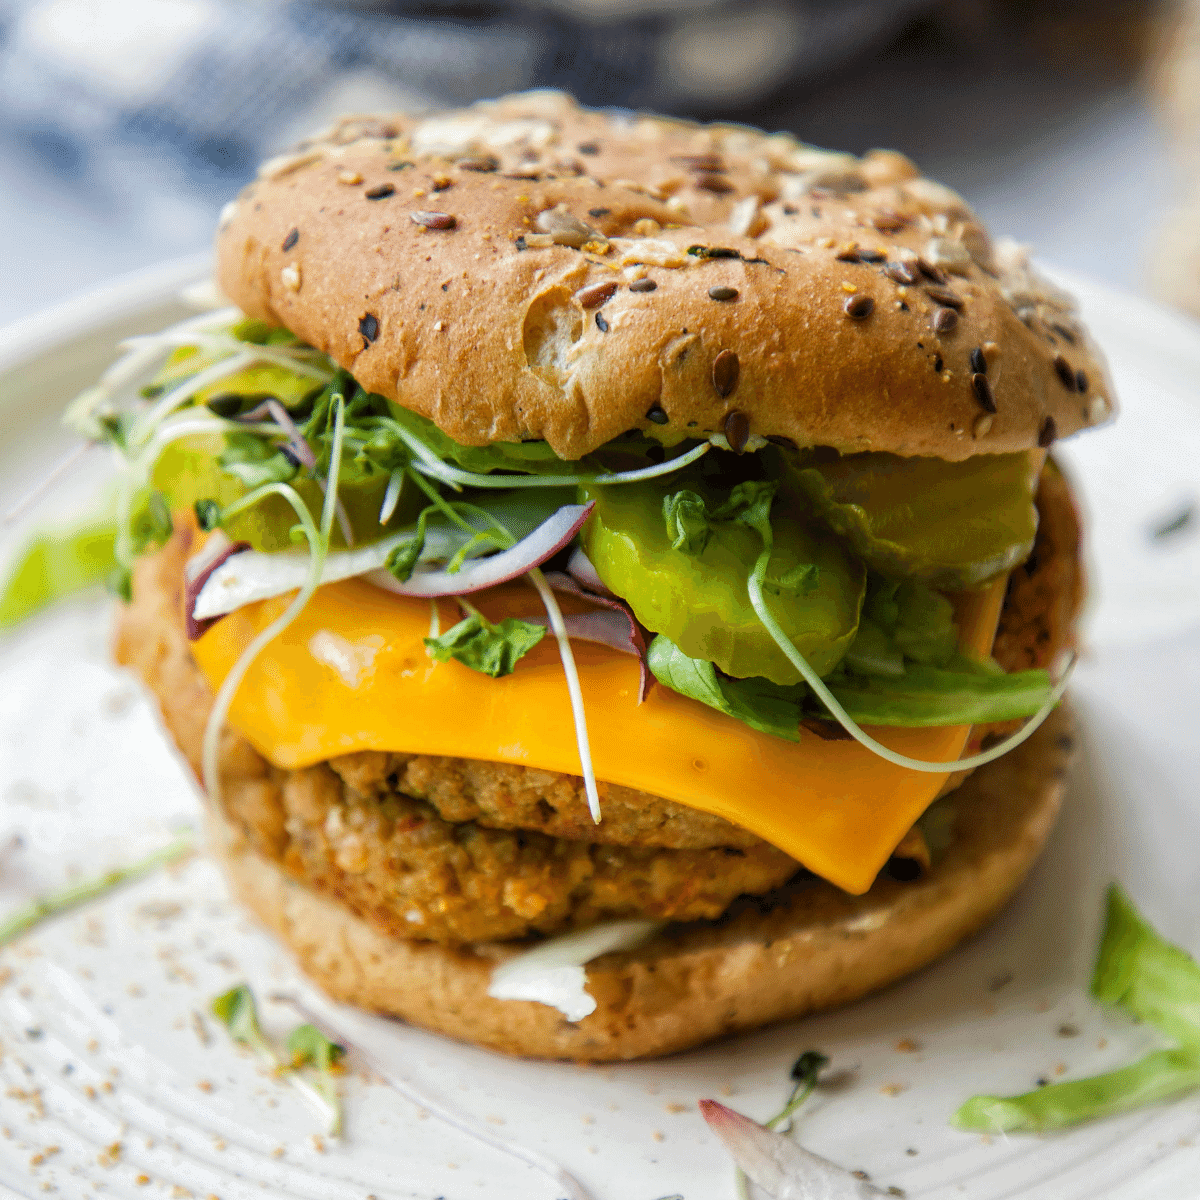 Homemade Vegan Turkey-Style Burgers - Plantifully Based